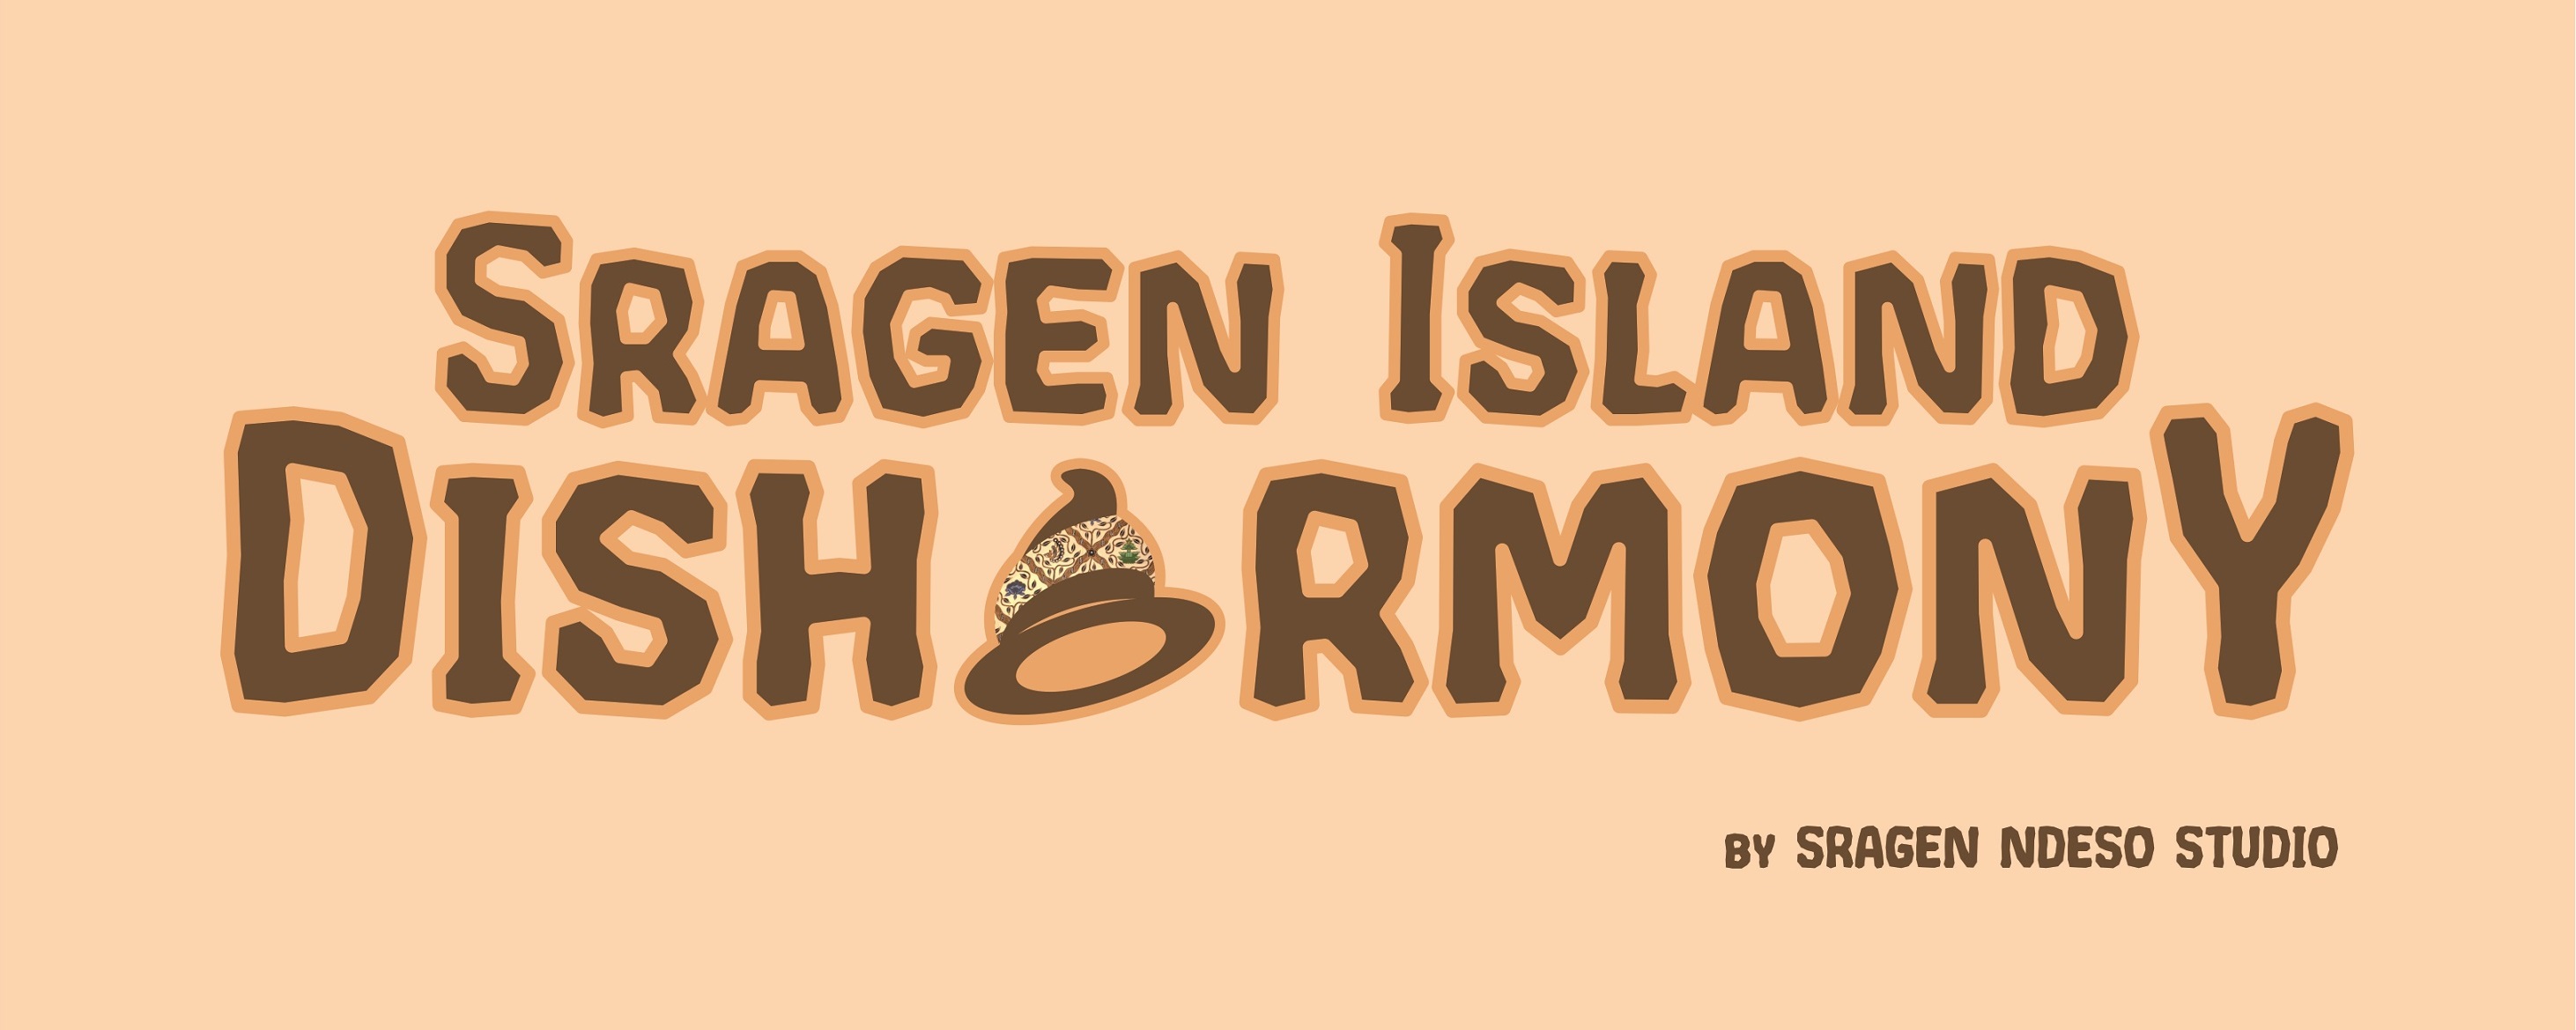 Sragen Island Disharmony